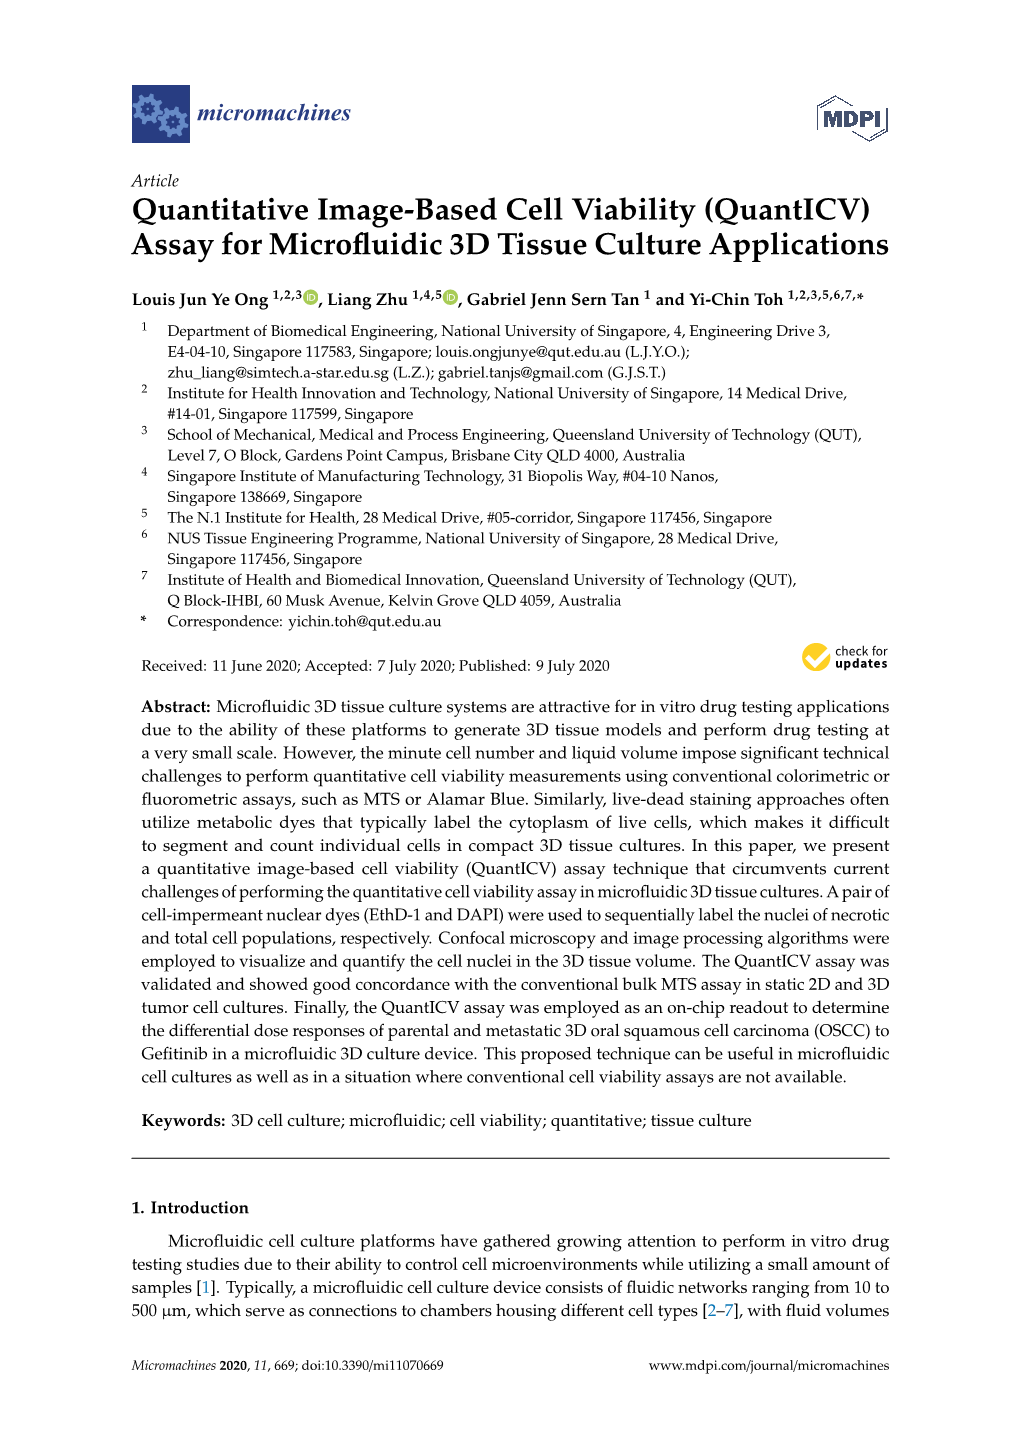 (Quanticv) Assay for Microfluidic 3D Tissue Culture Applications